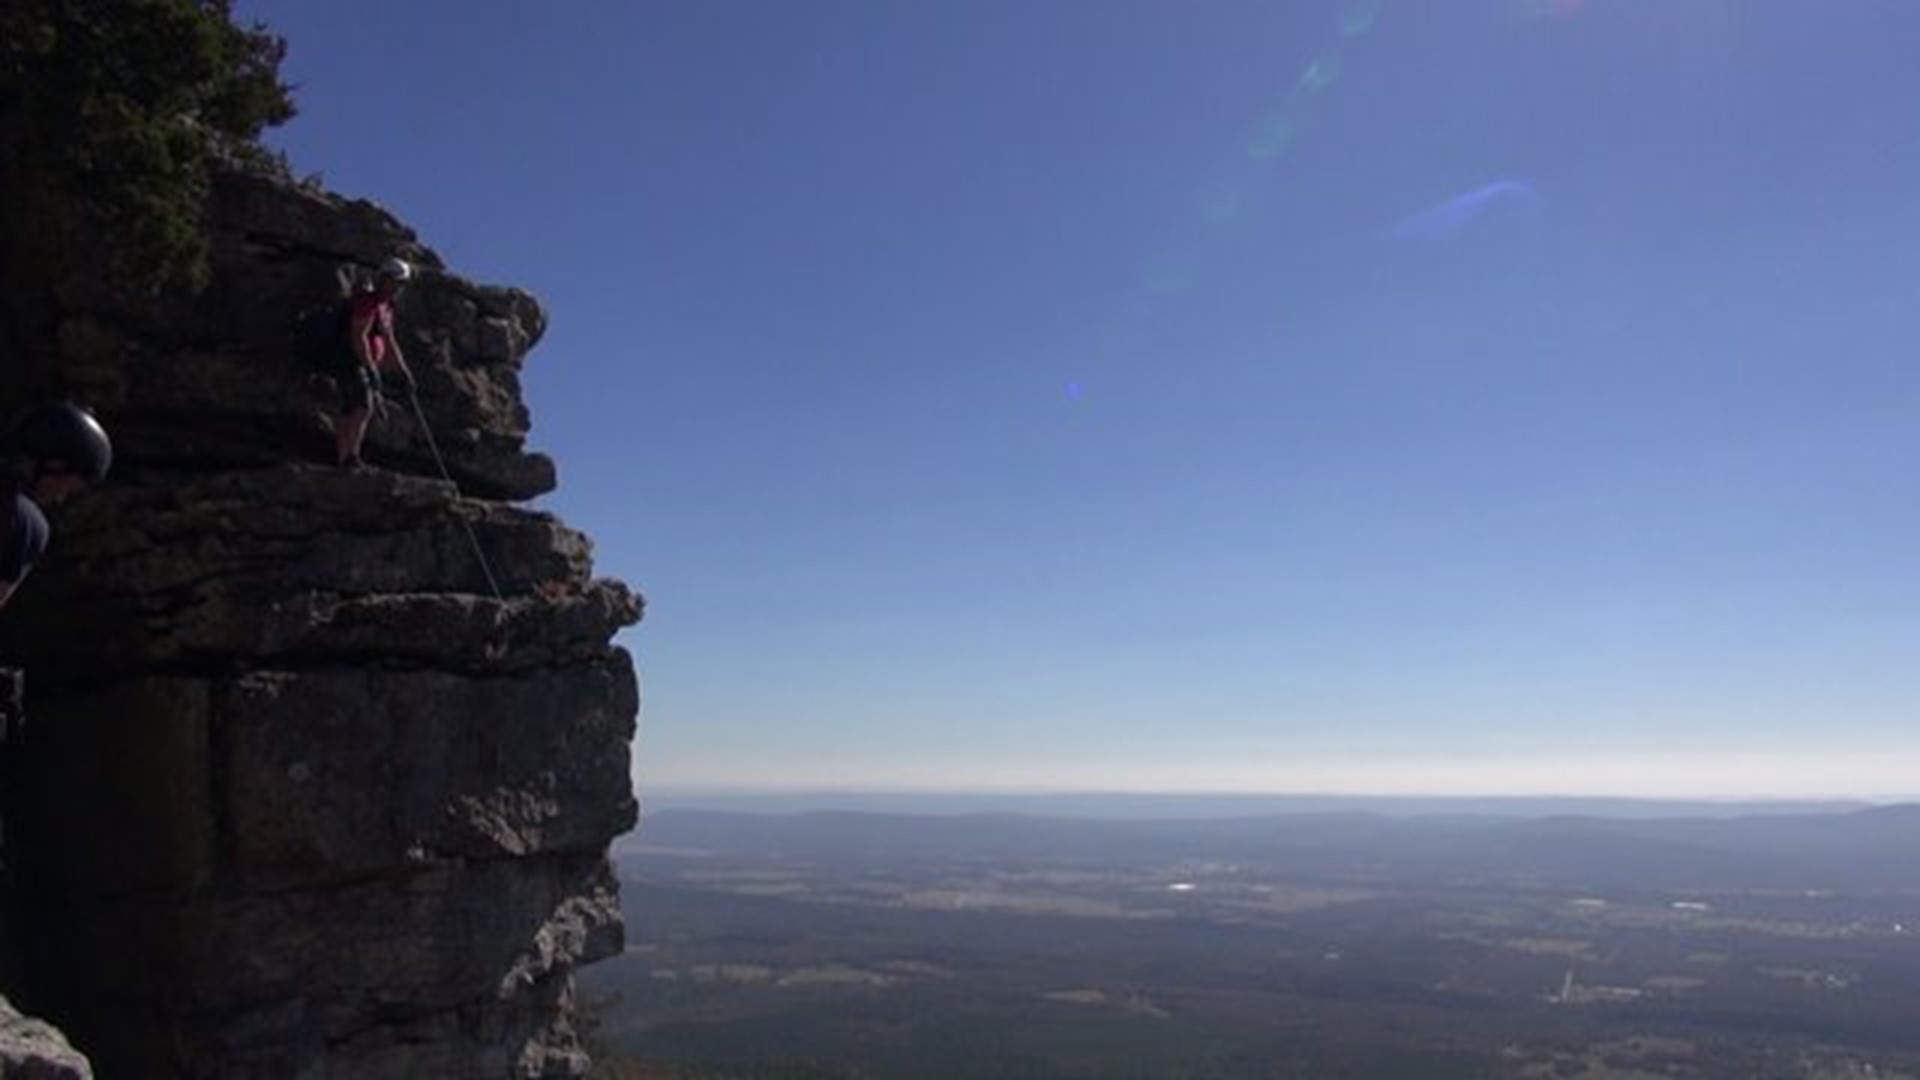 Adventure Arkansas: Mount Magazine Rock Climb